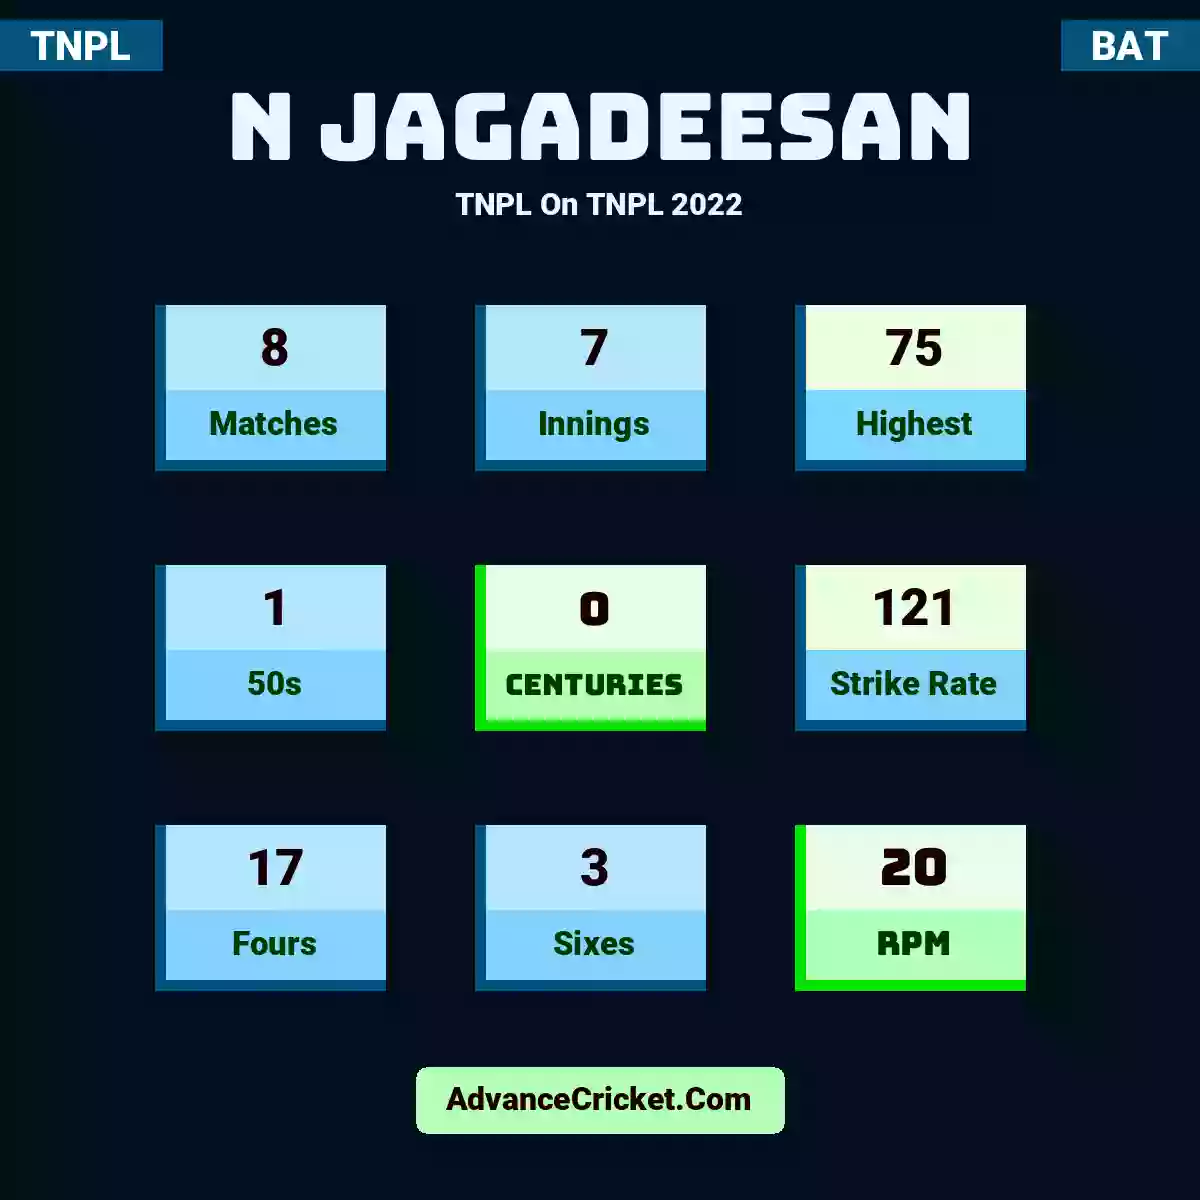 N Jagadeesan TNPL  On TNPL 2022, N Jagadeesan played 8 matches, scored 75 runs as highest, 1 half-centuries, and 0 centuries, with a strike rate of 121. N.Jagadeesan hit 17 fours and 3 sixes, with an RPM of 20.